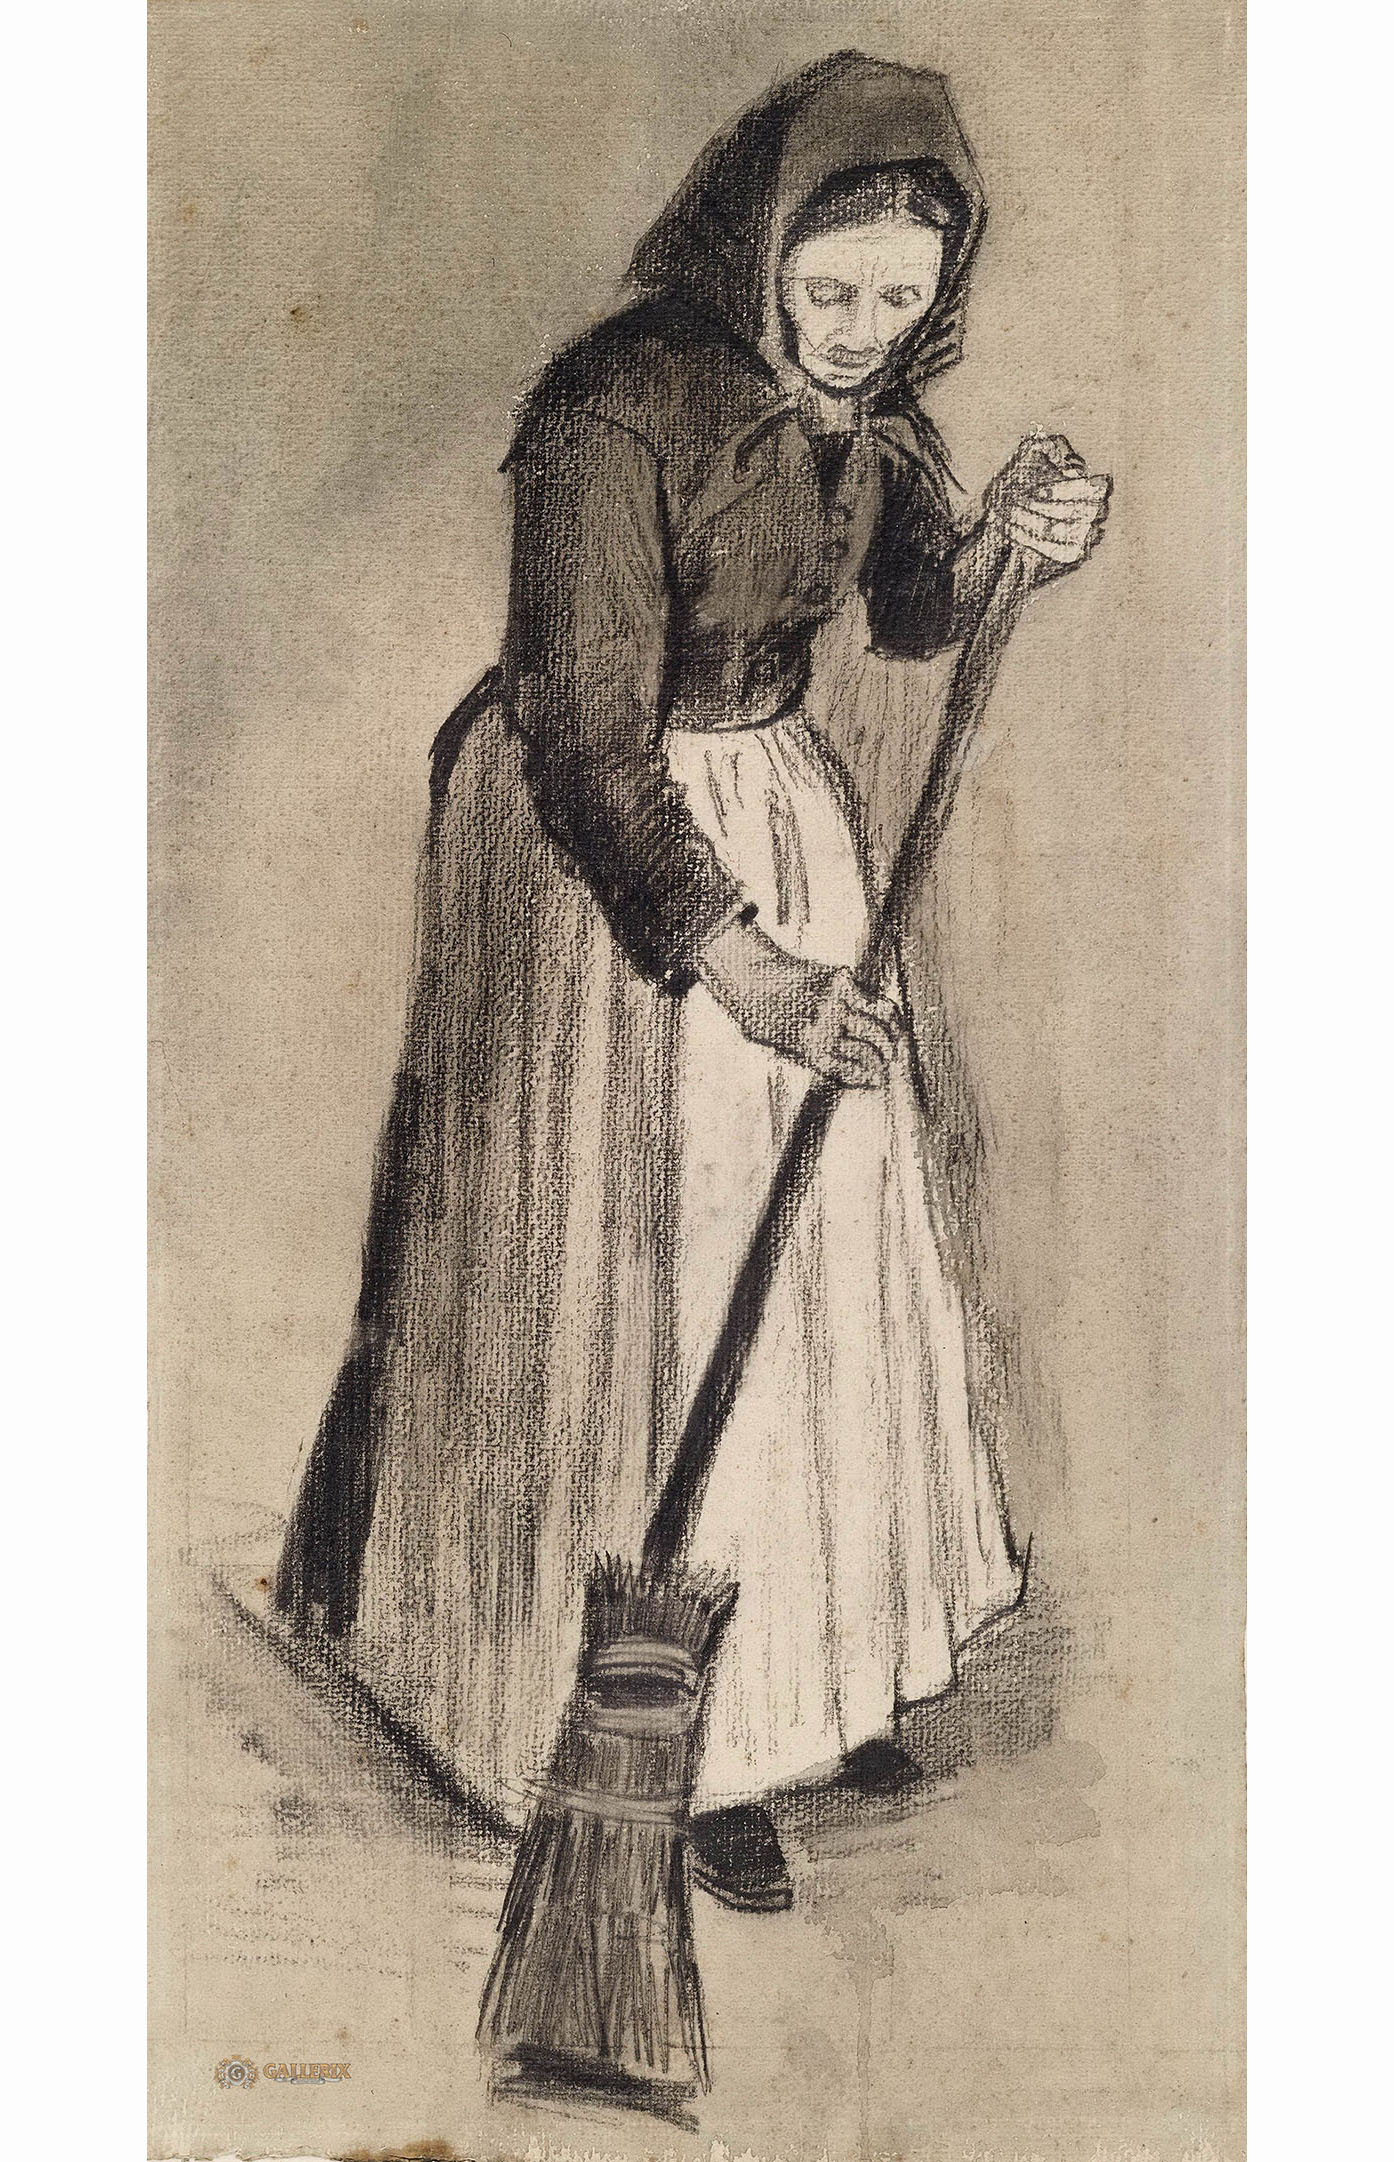 Винсент Ван Гог. "Женщина с метлой". 1882. Музей Ван Гога, Амстердам.